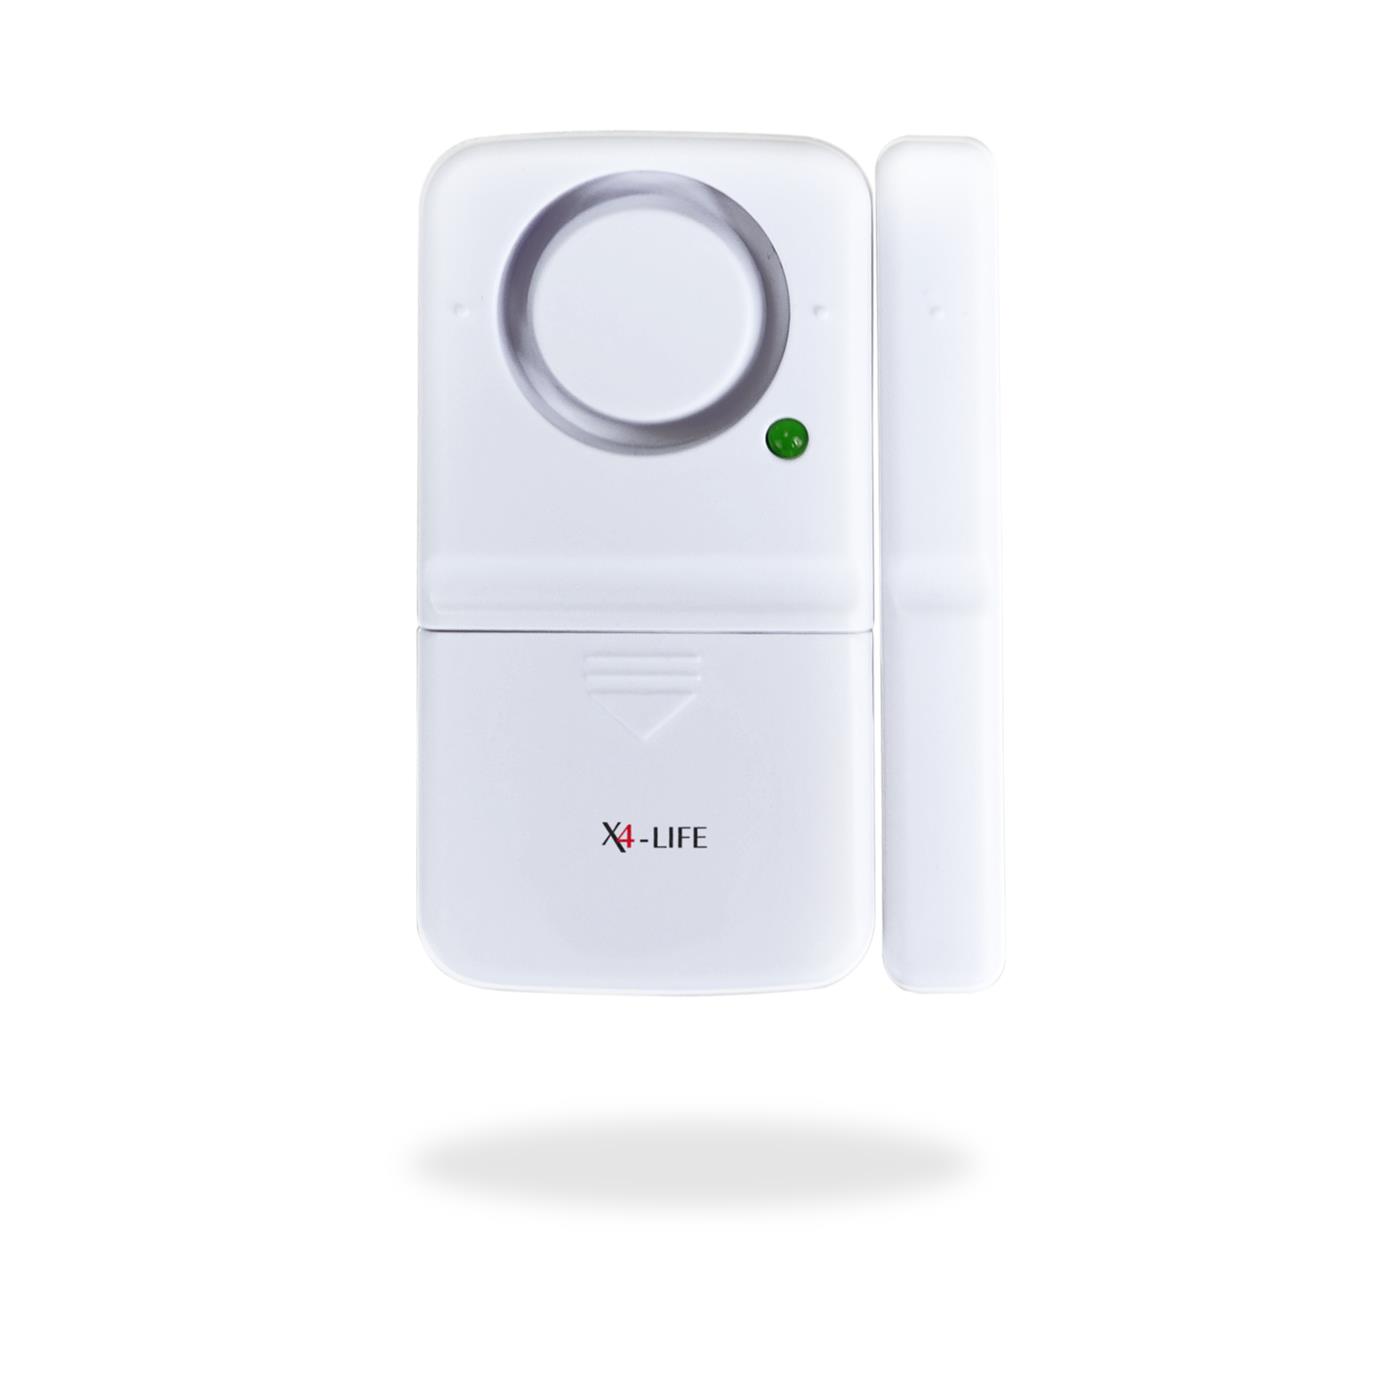 X4-LIFE Security Alarm - Türalarm Fensteralarm - Einbruchschutz 110 dB